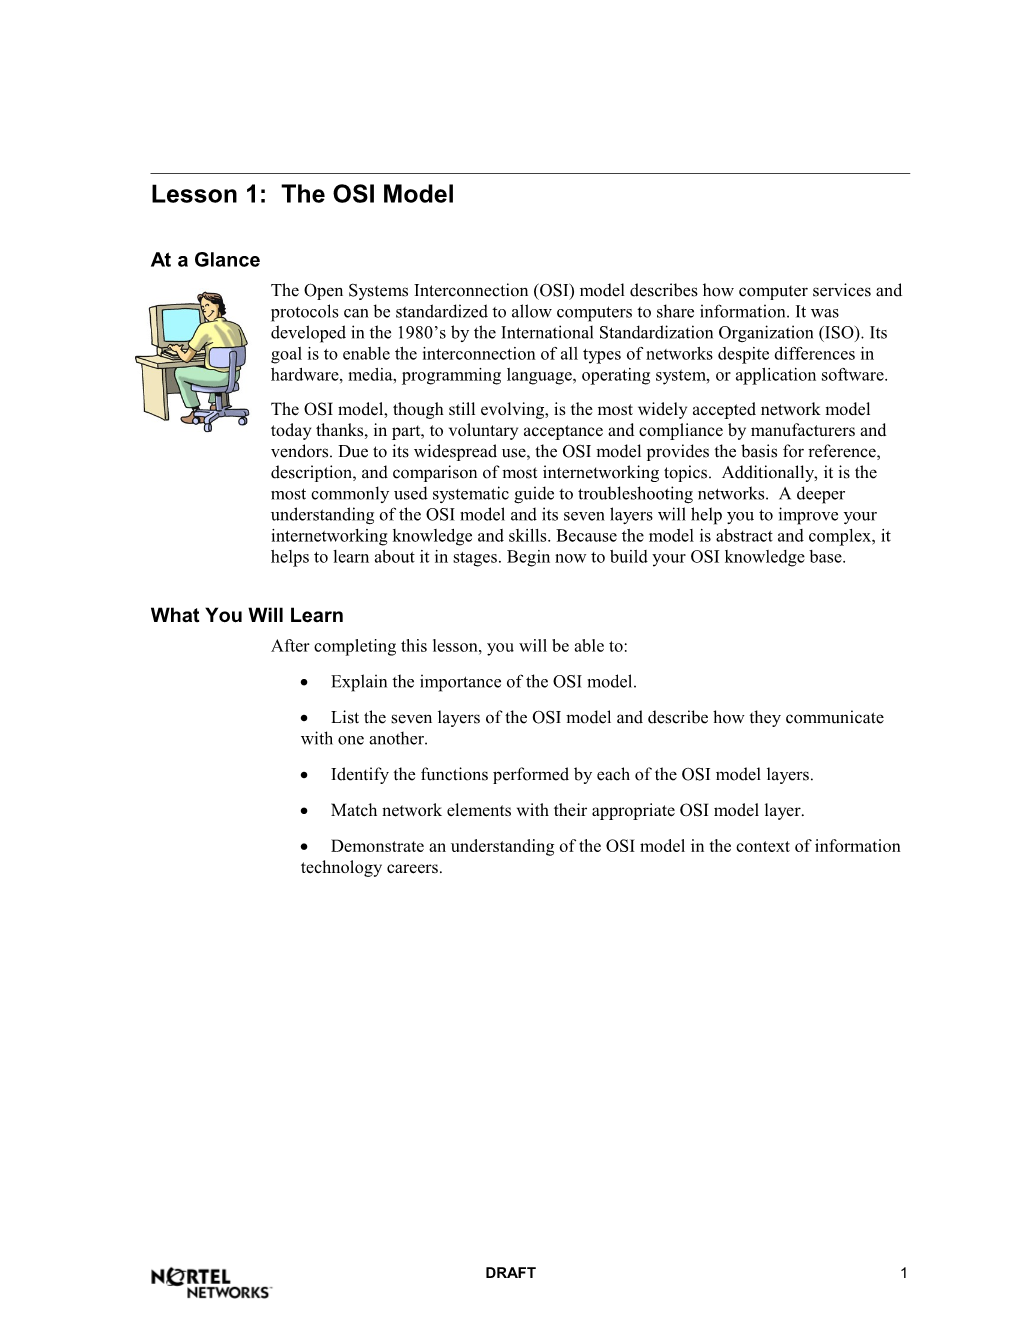 Lesson 1: the OSI Model